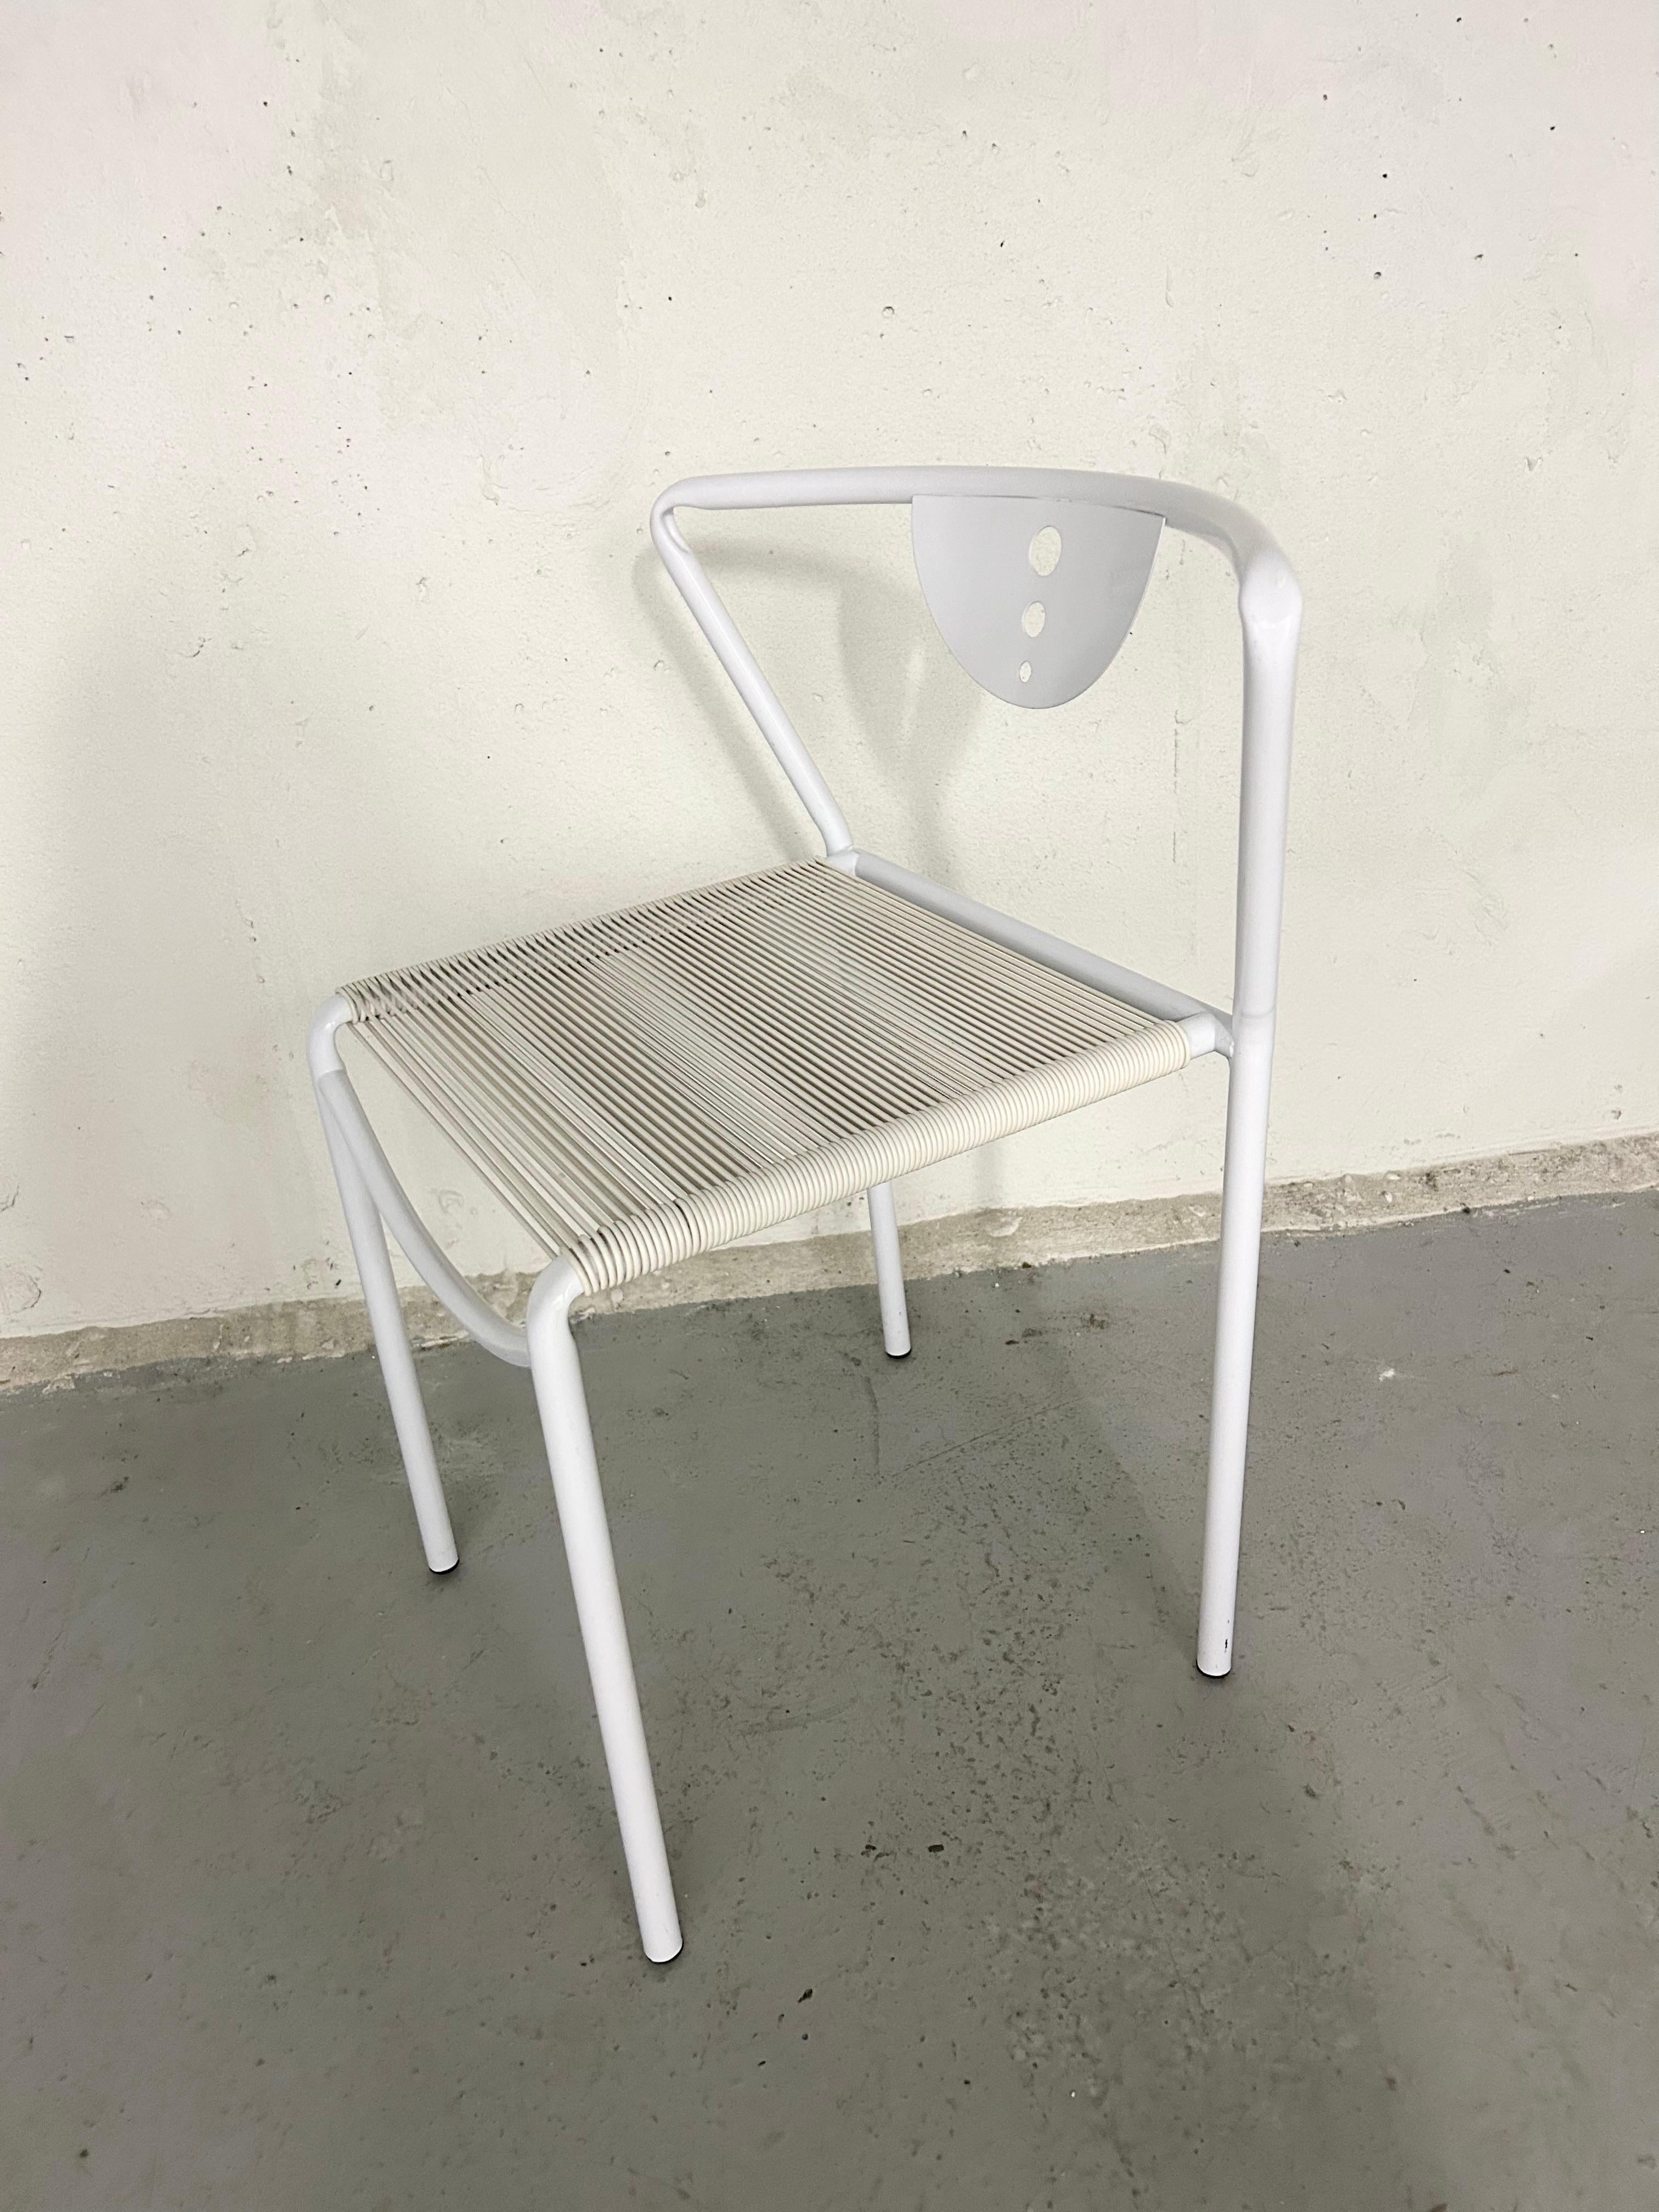 Italian Giandomenico Belotti for Fly Line Spaghetti Metal Dining Chair. Has white metal frame and rubber “spaghetti” seat. Minimal wear.